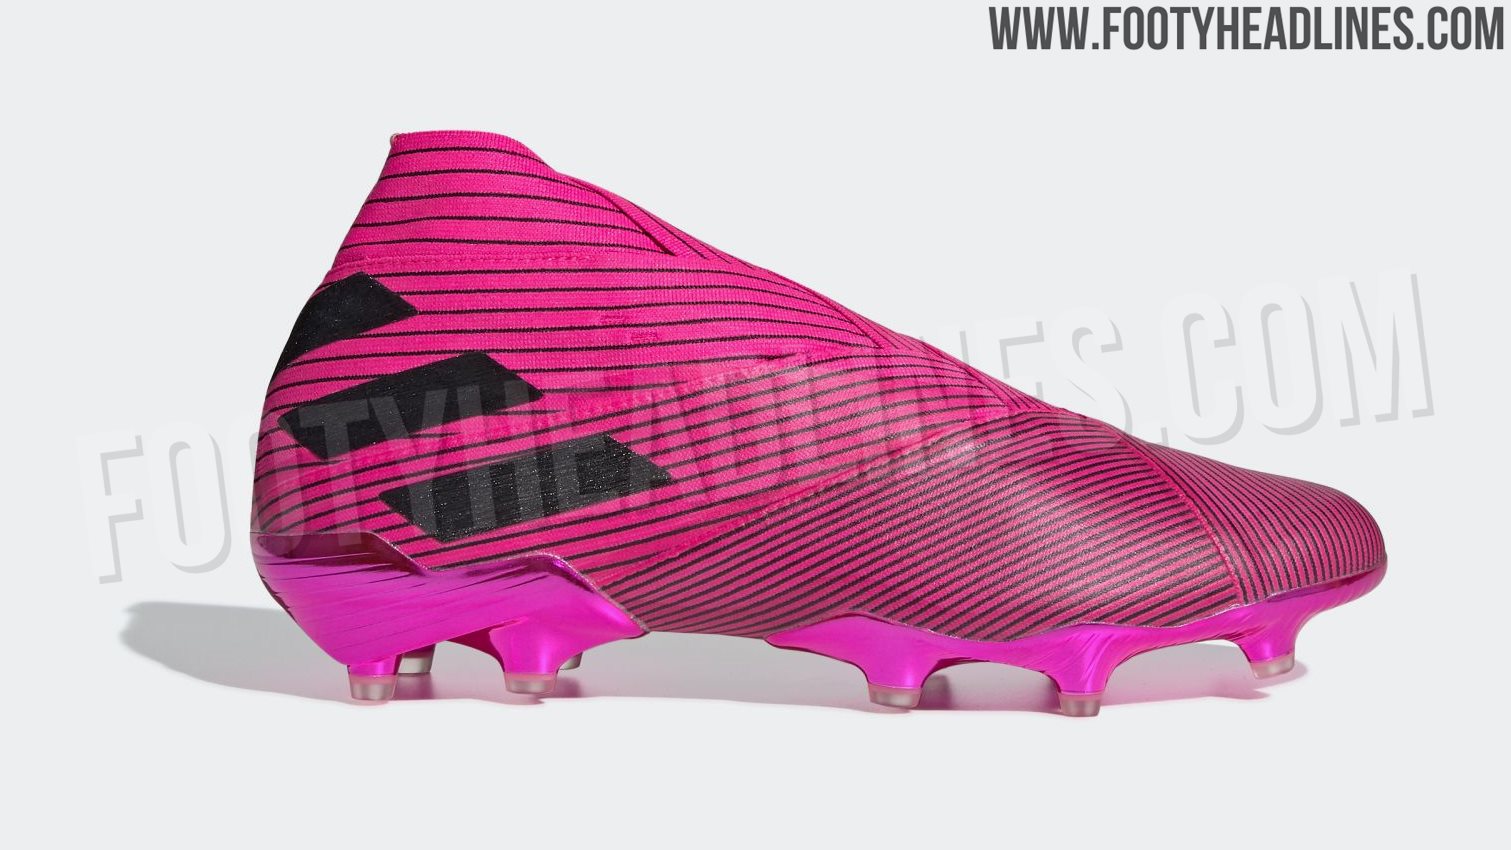 adidas nemeziz pink and black